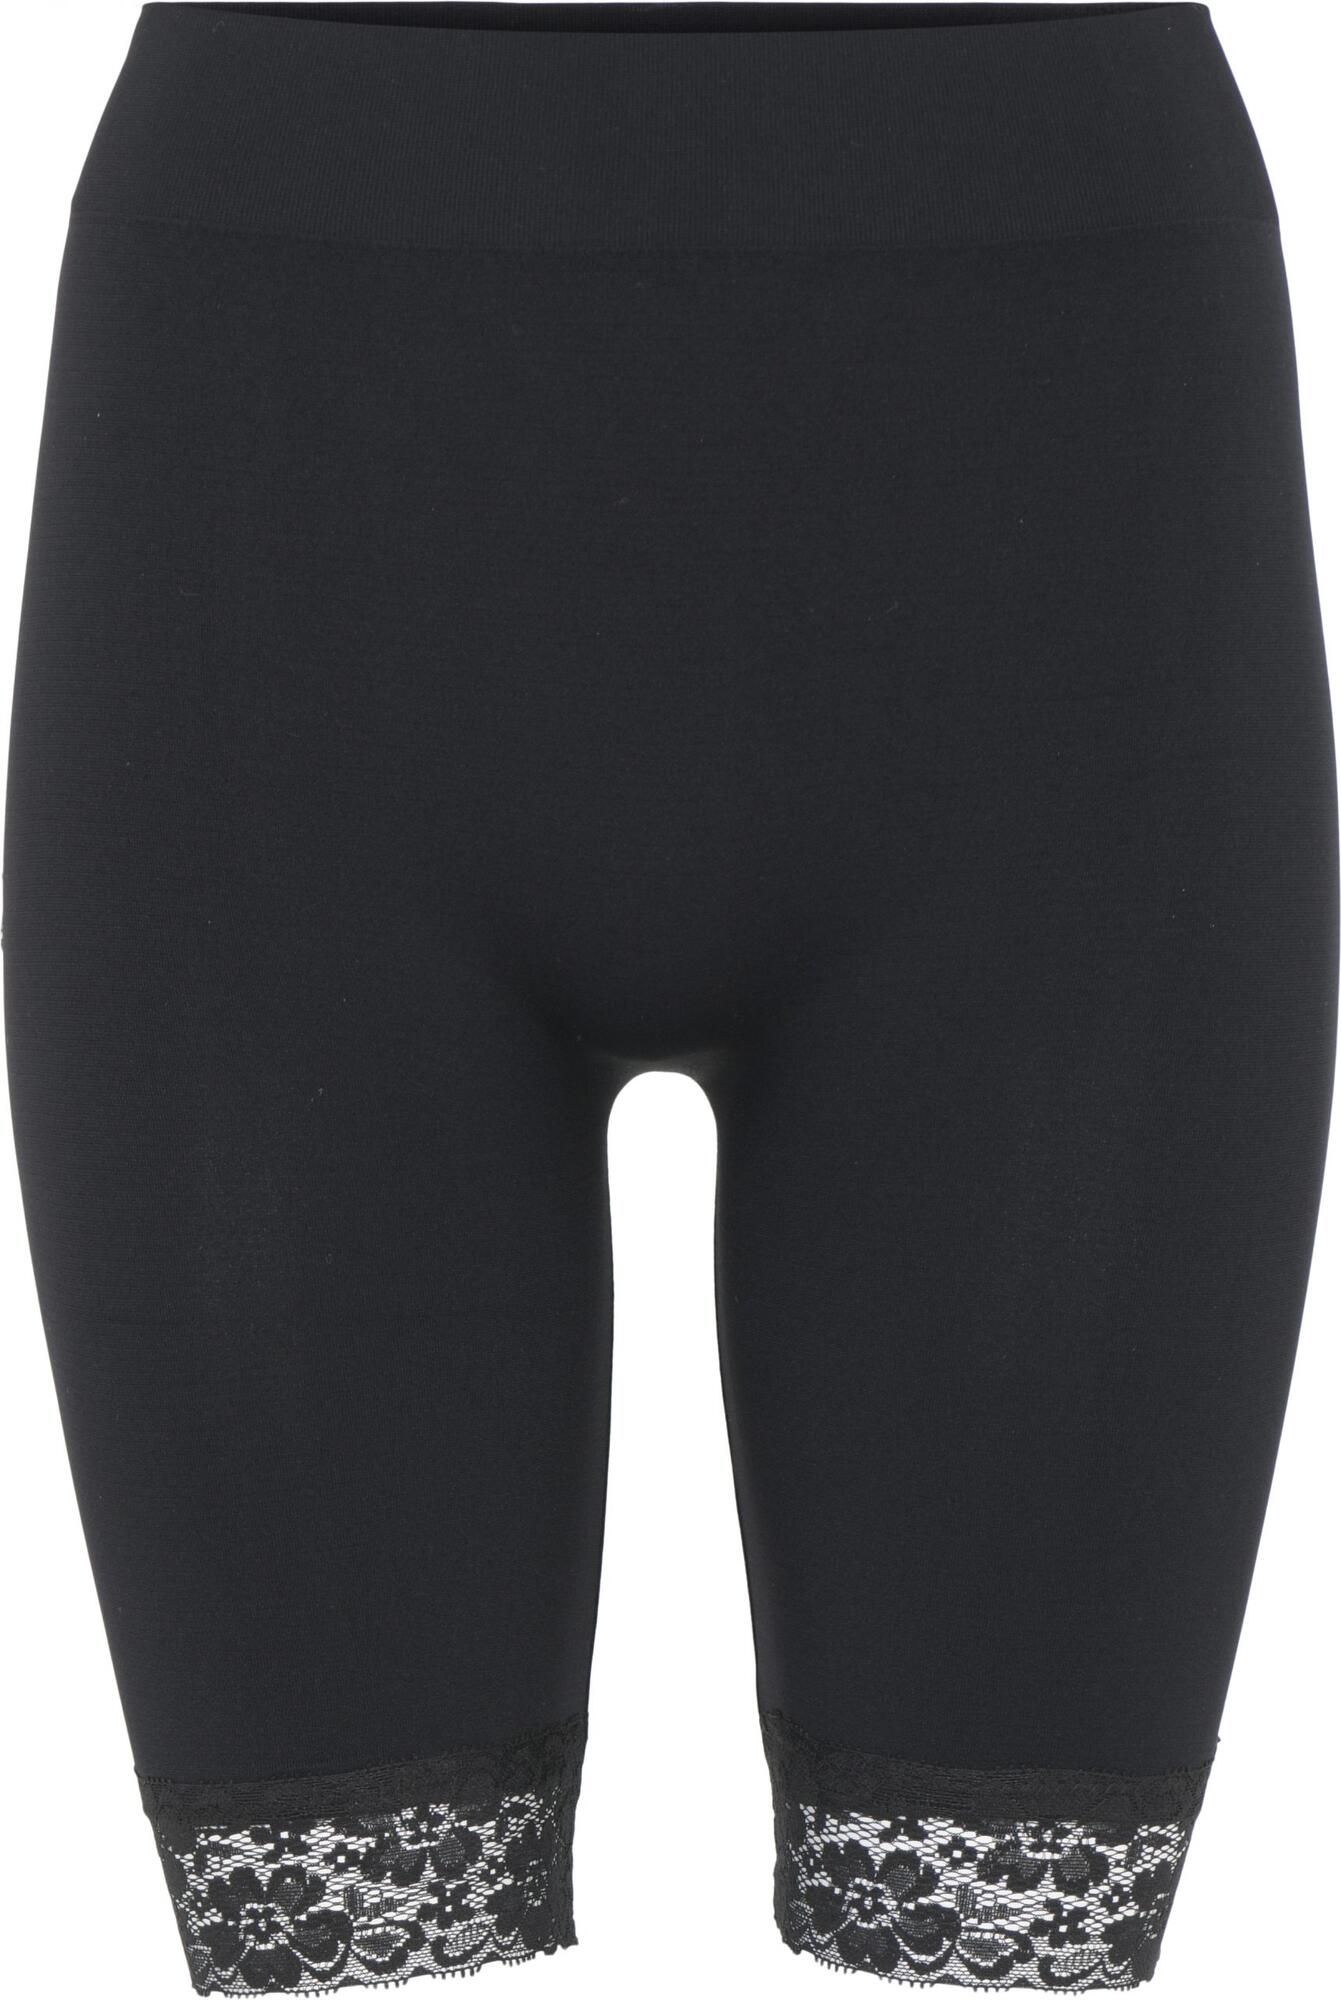 DECOY Black Long Shorts w/lace